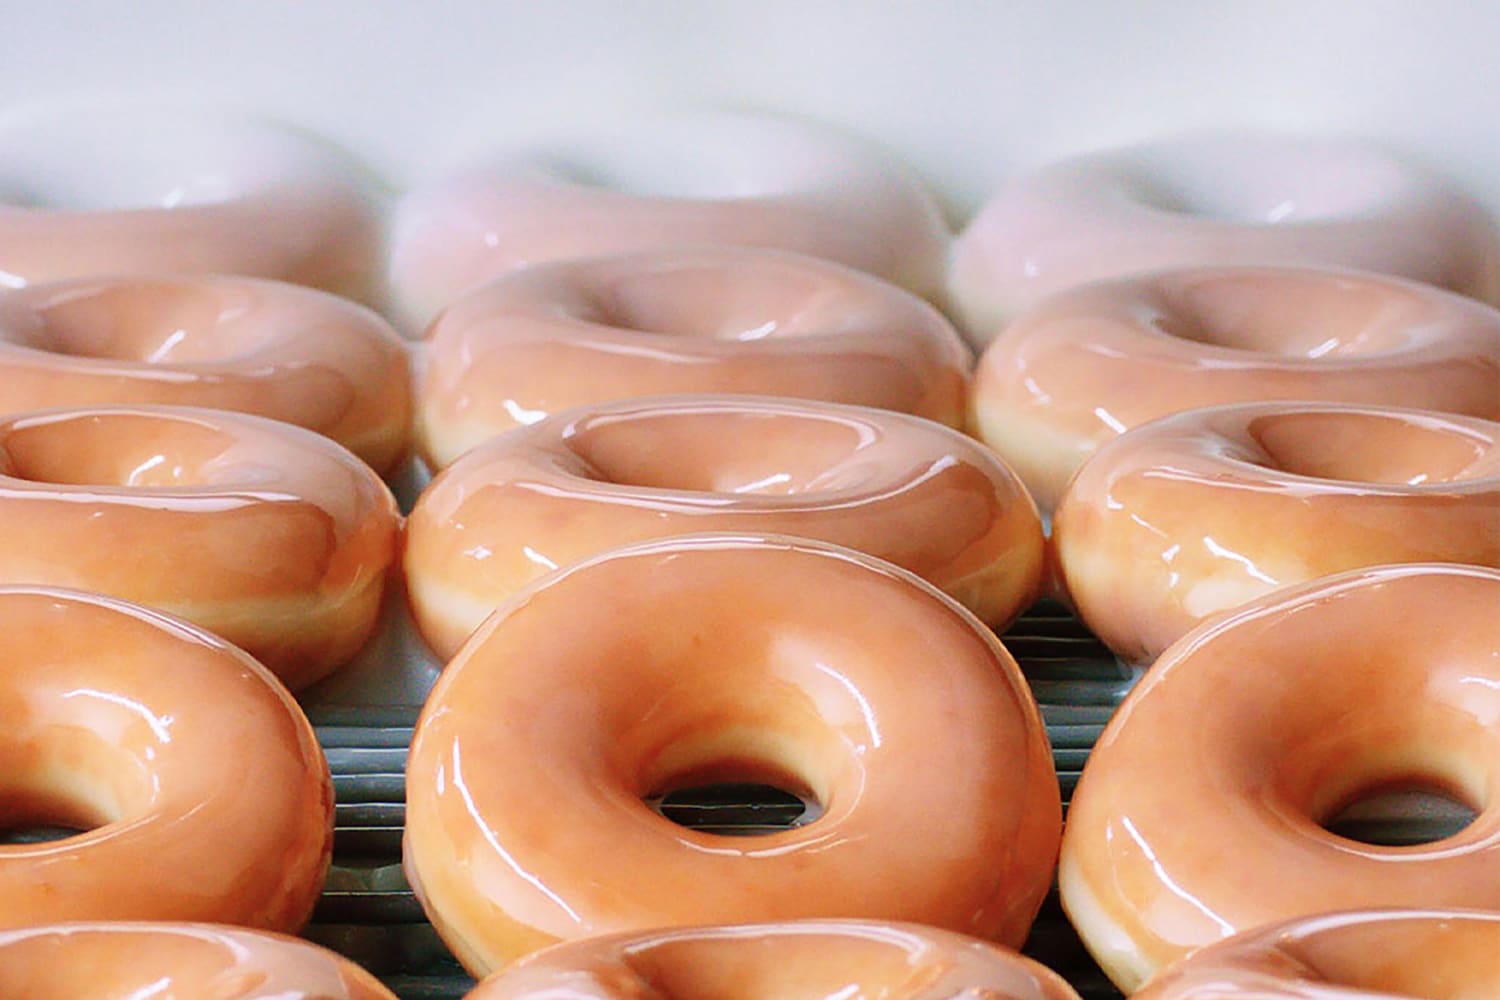 Krispy Kreme is selling a dozen doughnuts for $4.01 on April Fools' Day: 'No joking'